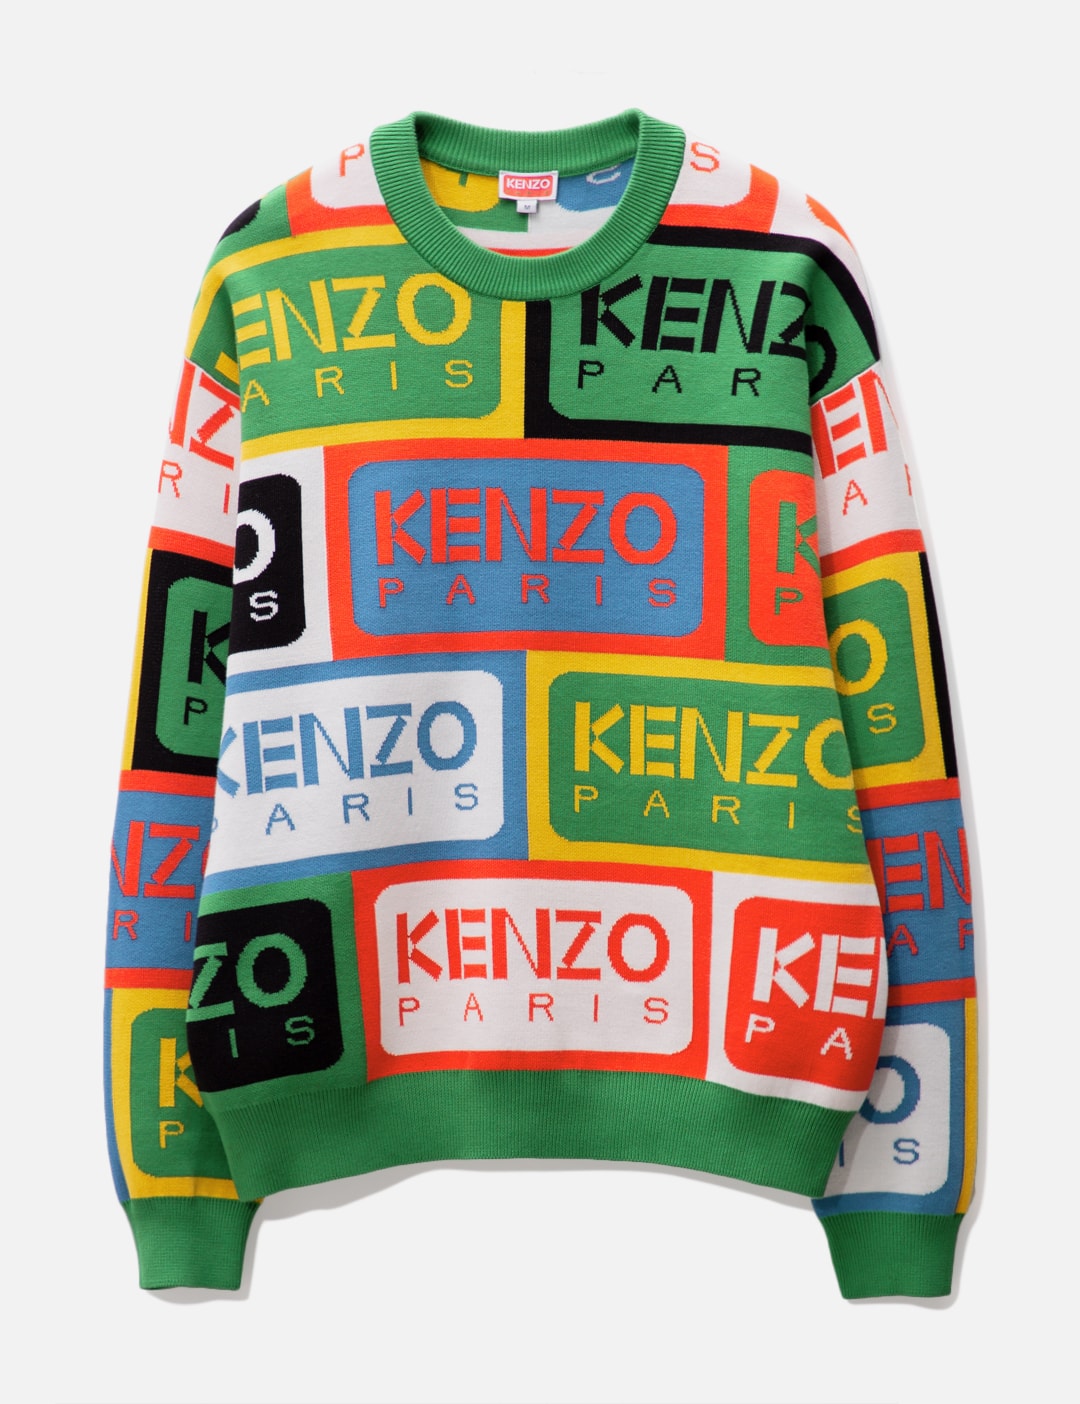 rivaal Kustlijn Land van staatsburgerschap Kenzo - KENZO PARIS LABEL SWEATER | HBX - Globally Curated Fashion and  Lifestyle by Hypebeast